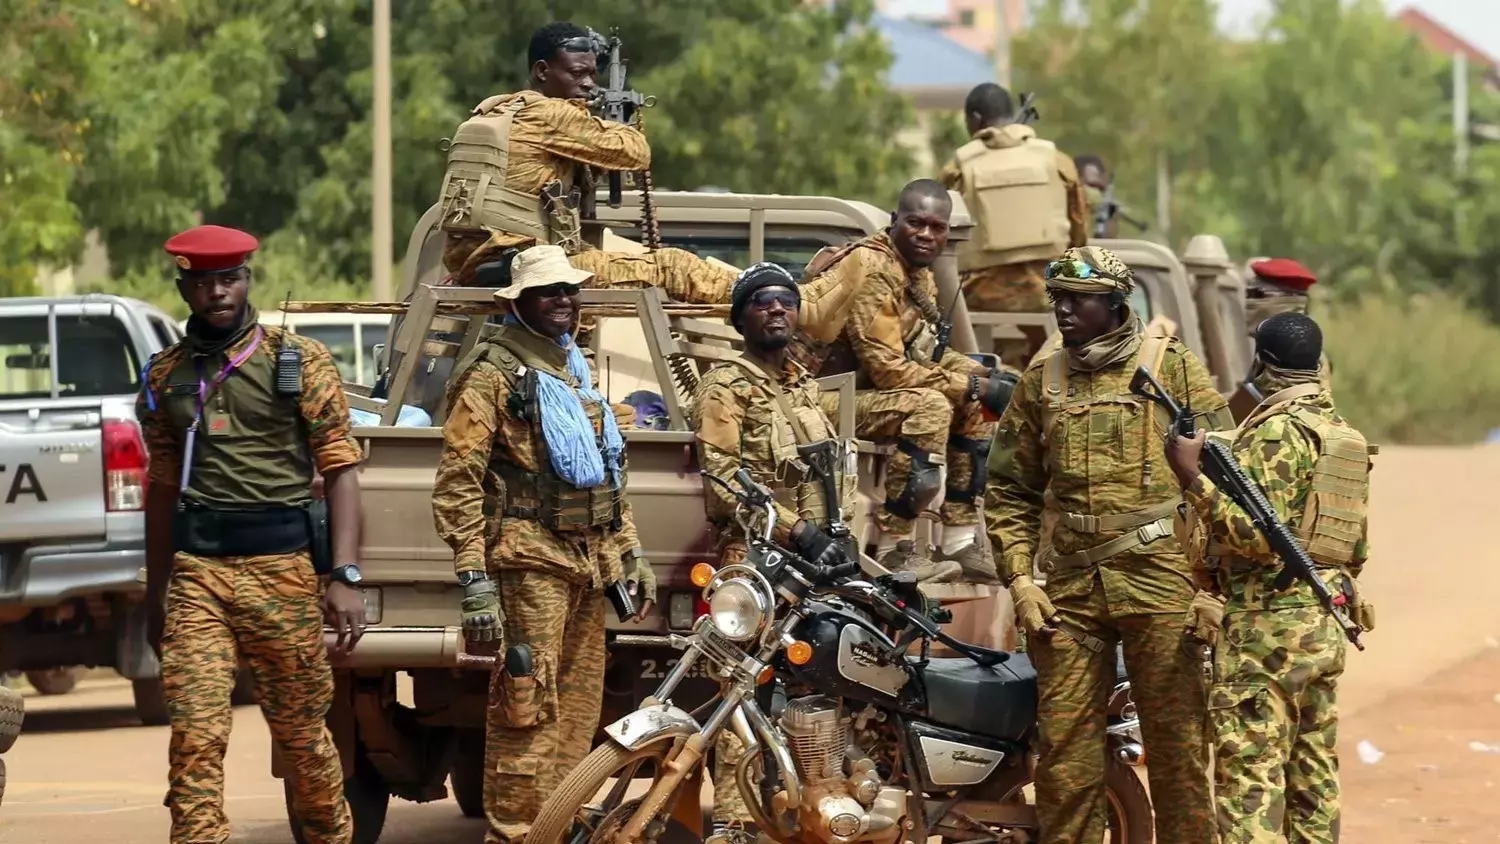 Burkina military disavows soldiers in disturbing social media clip